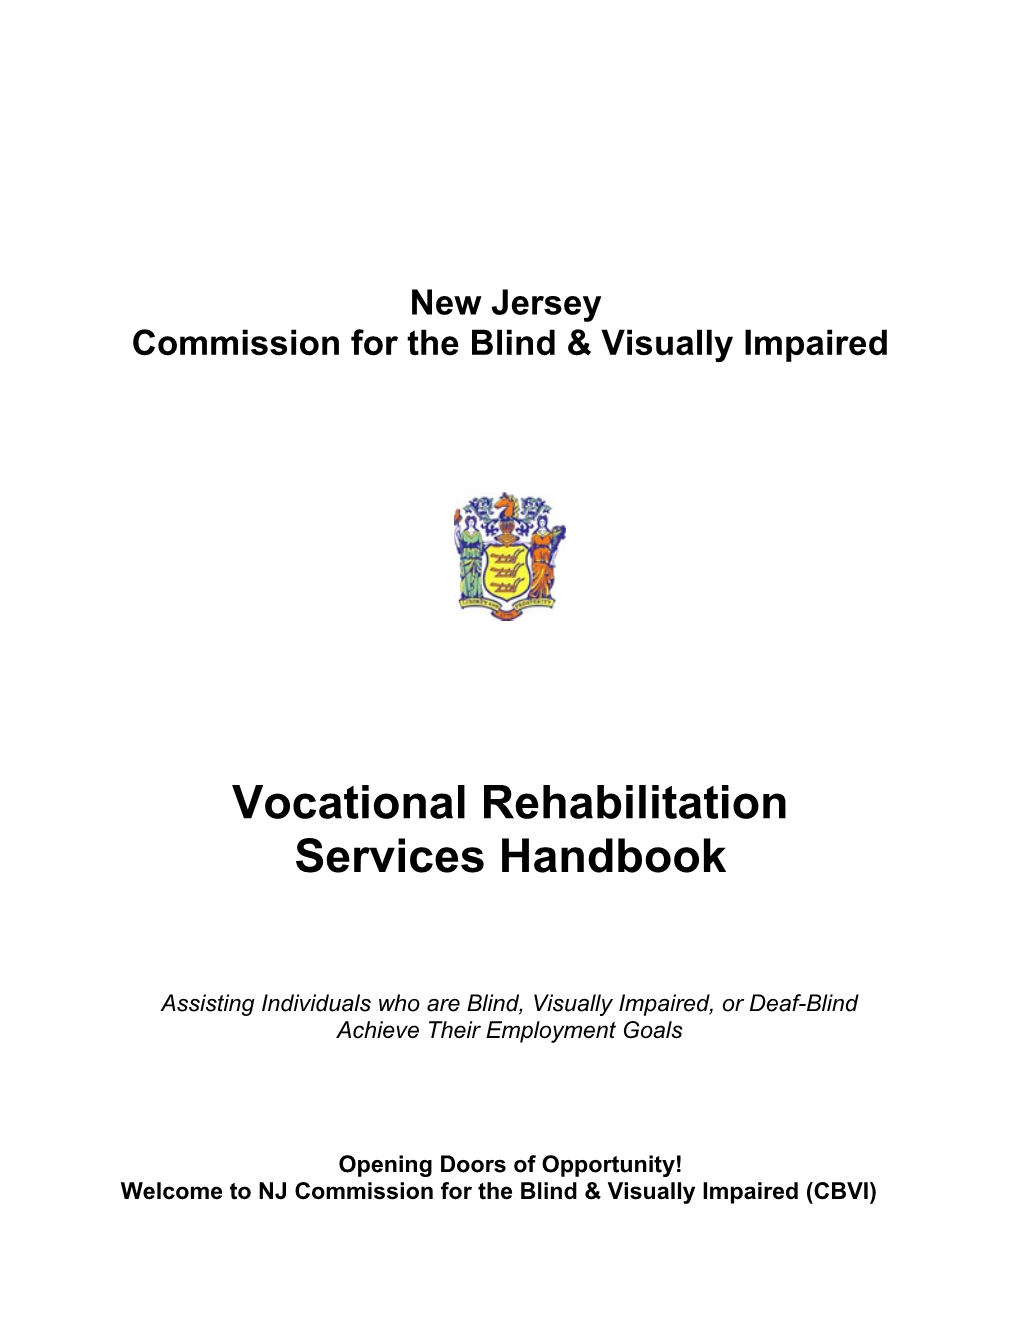 Vocational Rehabilitation Services Handbook